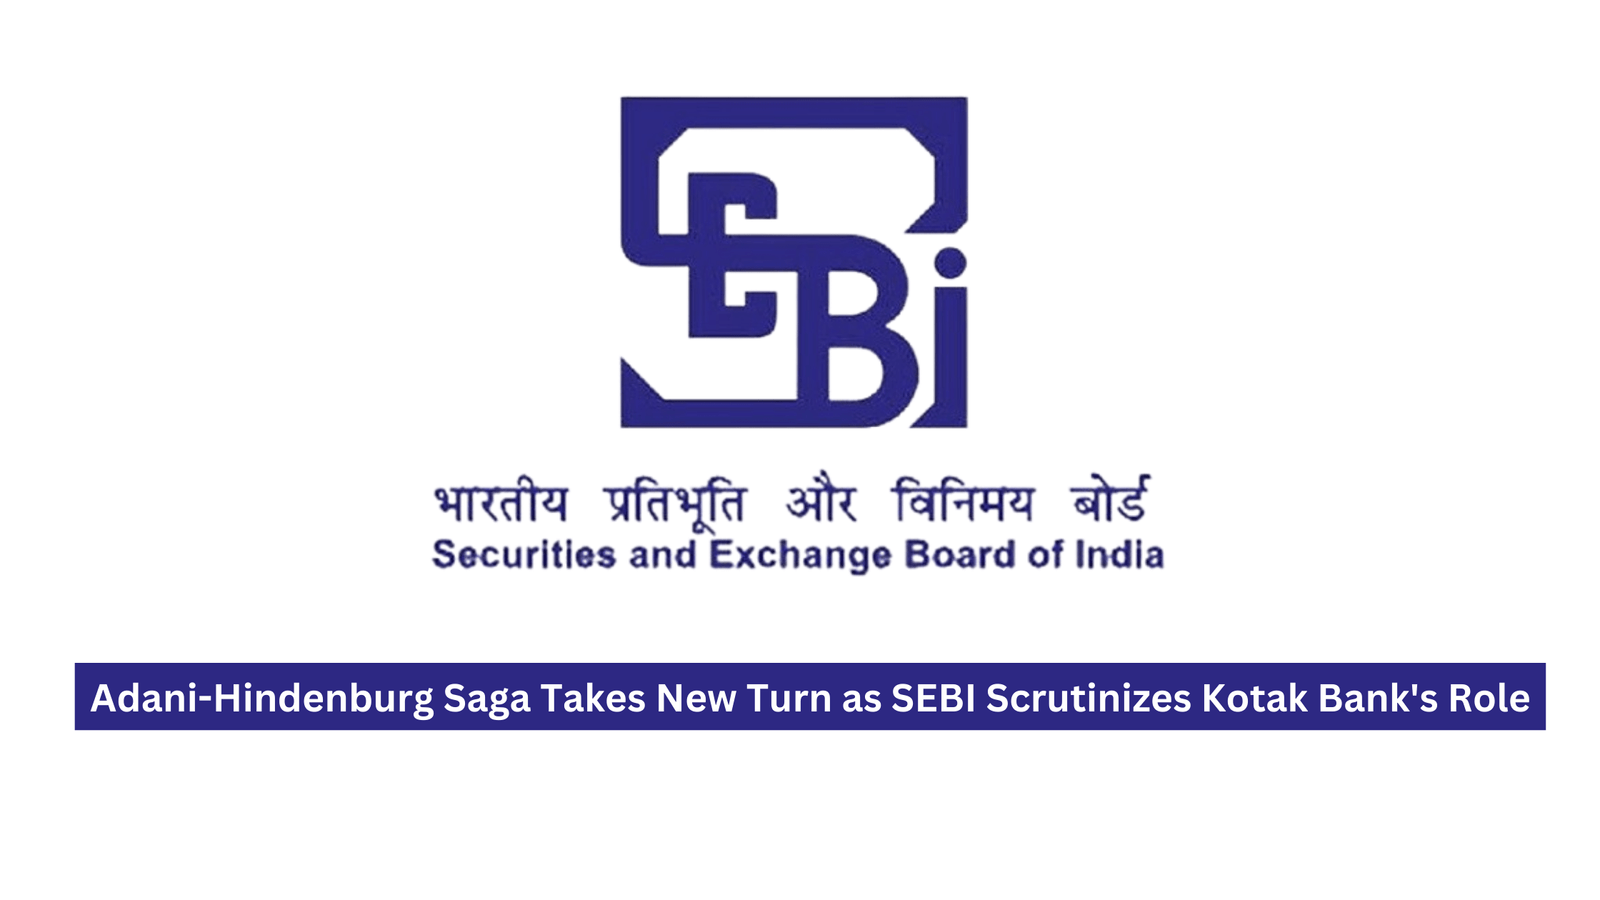 Adani-Hindenburg Saga Takes New Turn as SEBI Scrutinizes Kotak Bank’s Role